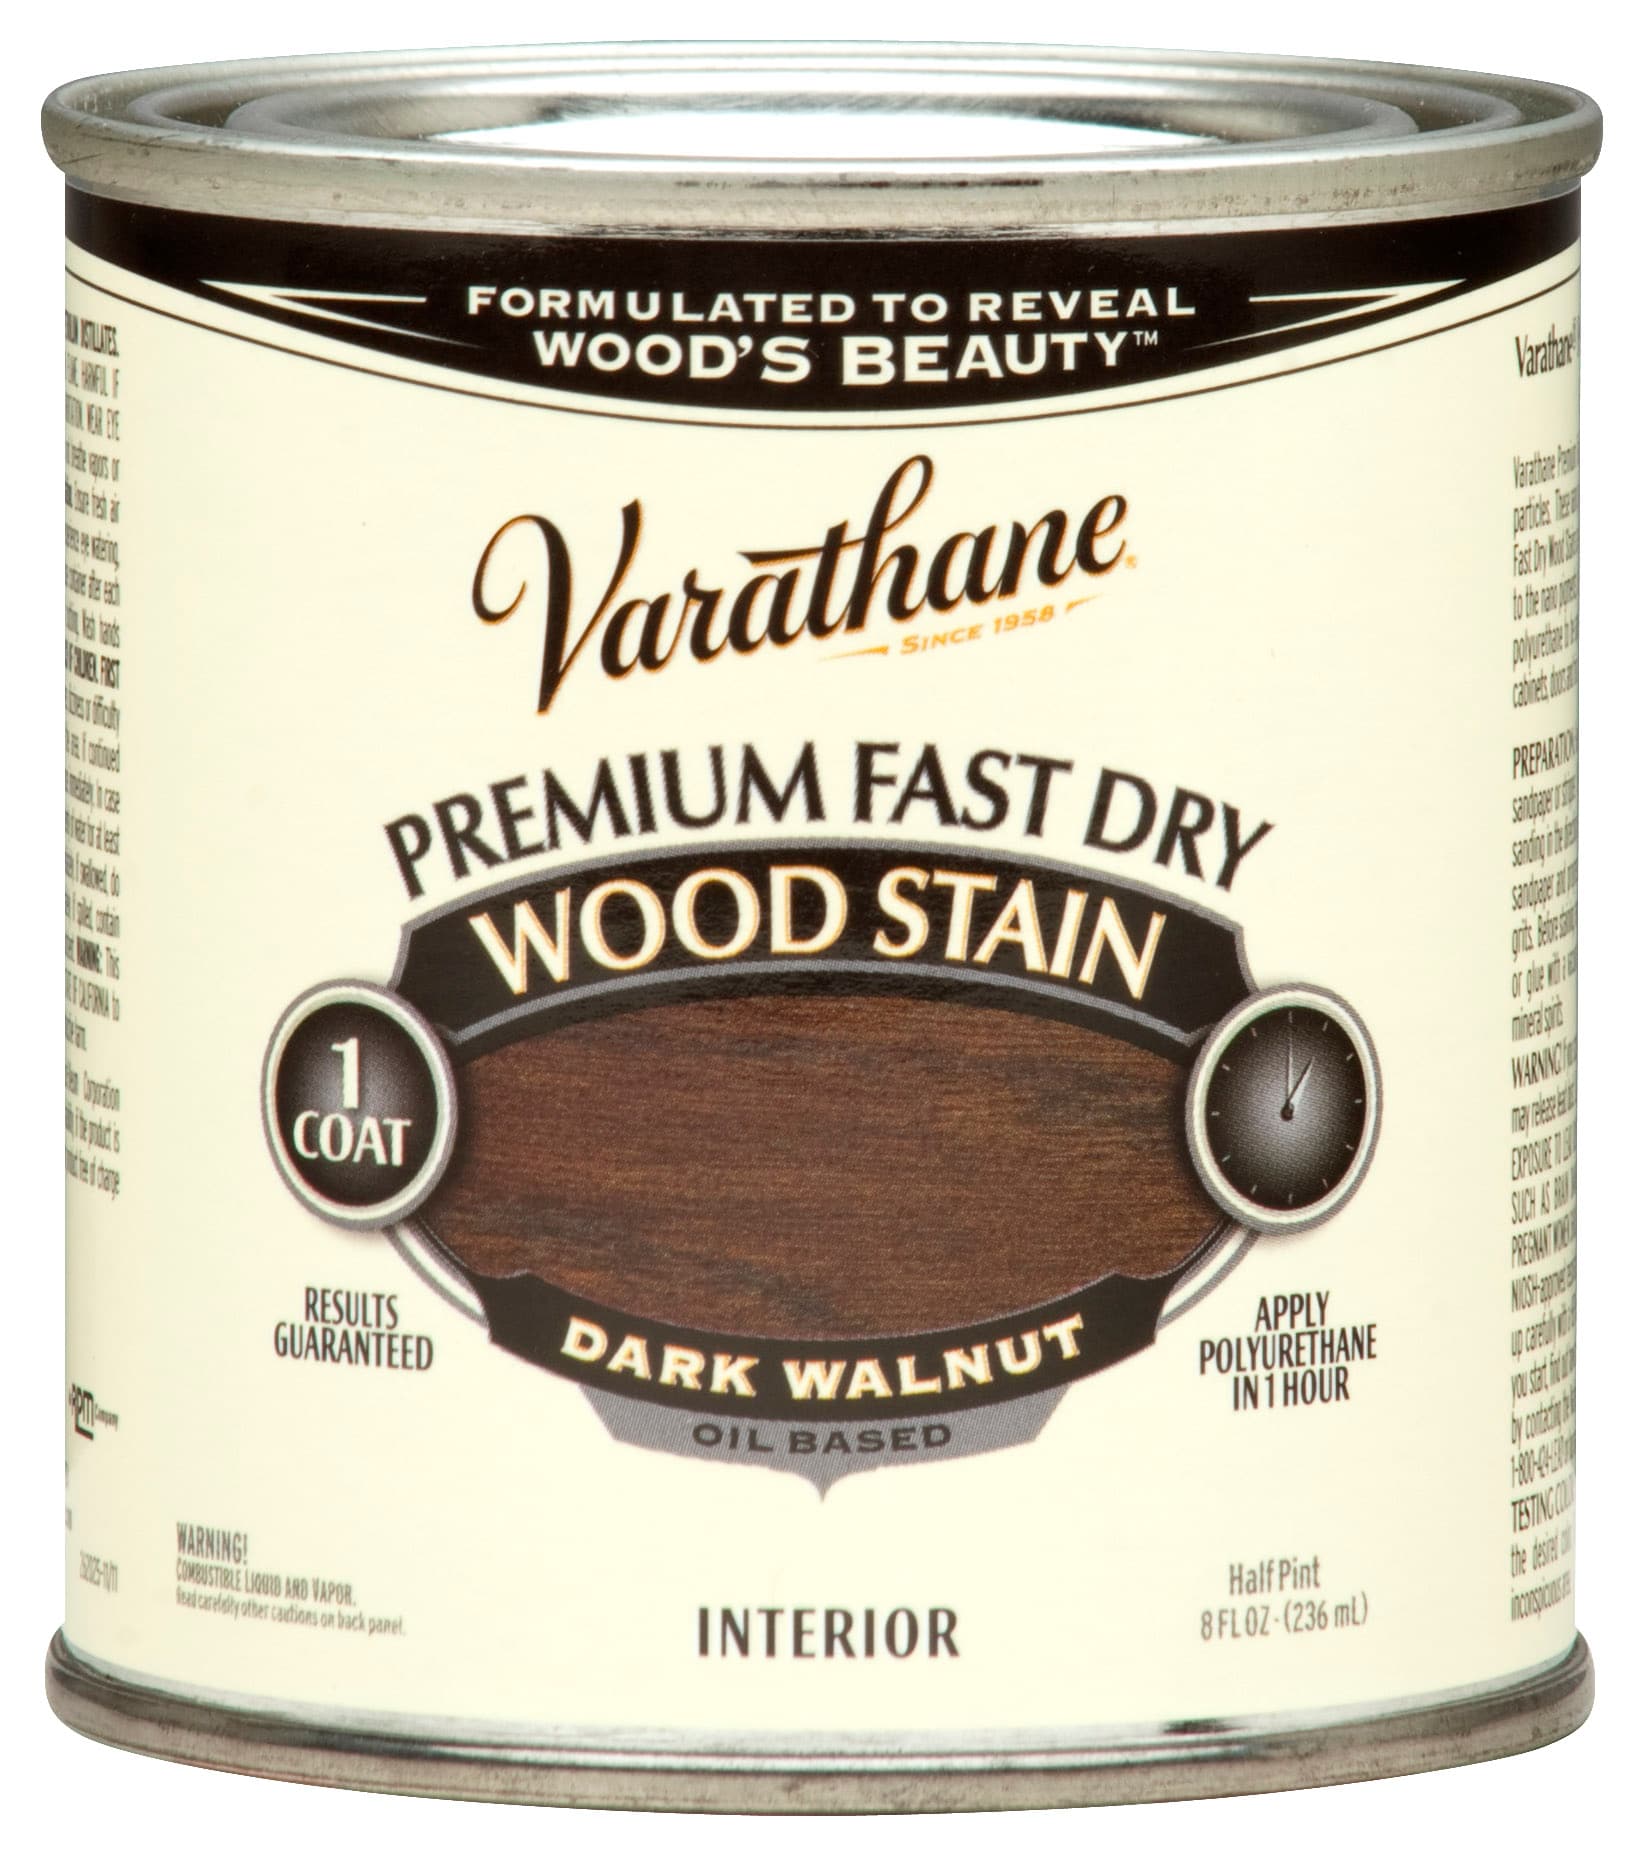 Varathane fast. Масло Varathane Wood Stain. Масло Varathane fast Dry быстросохнущее тонирующее. Цветное масло для дерева Varathane fast Dry 262025 темный орех 0.236 л. Масло Varathane Premium fast Dry Wood Stain.